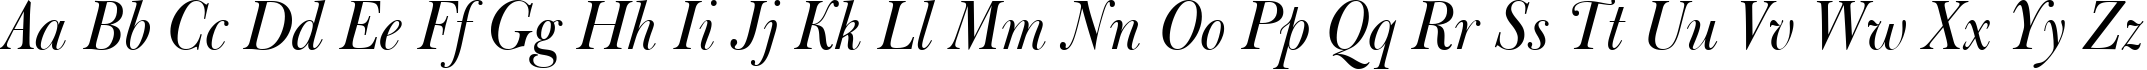 Пример написания английского алфавита шрифтом Bulmer Italic BT